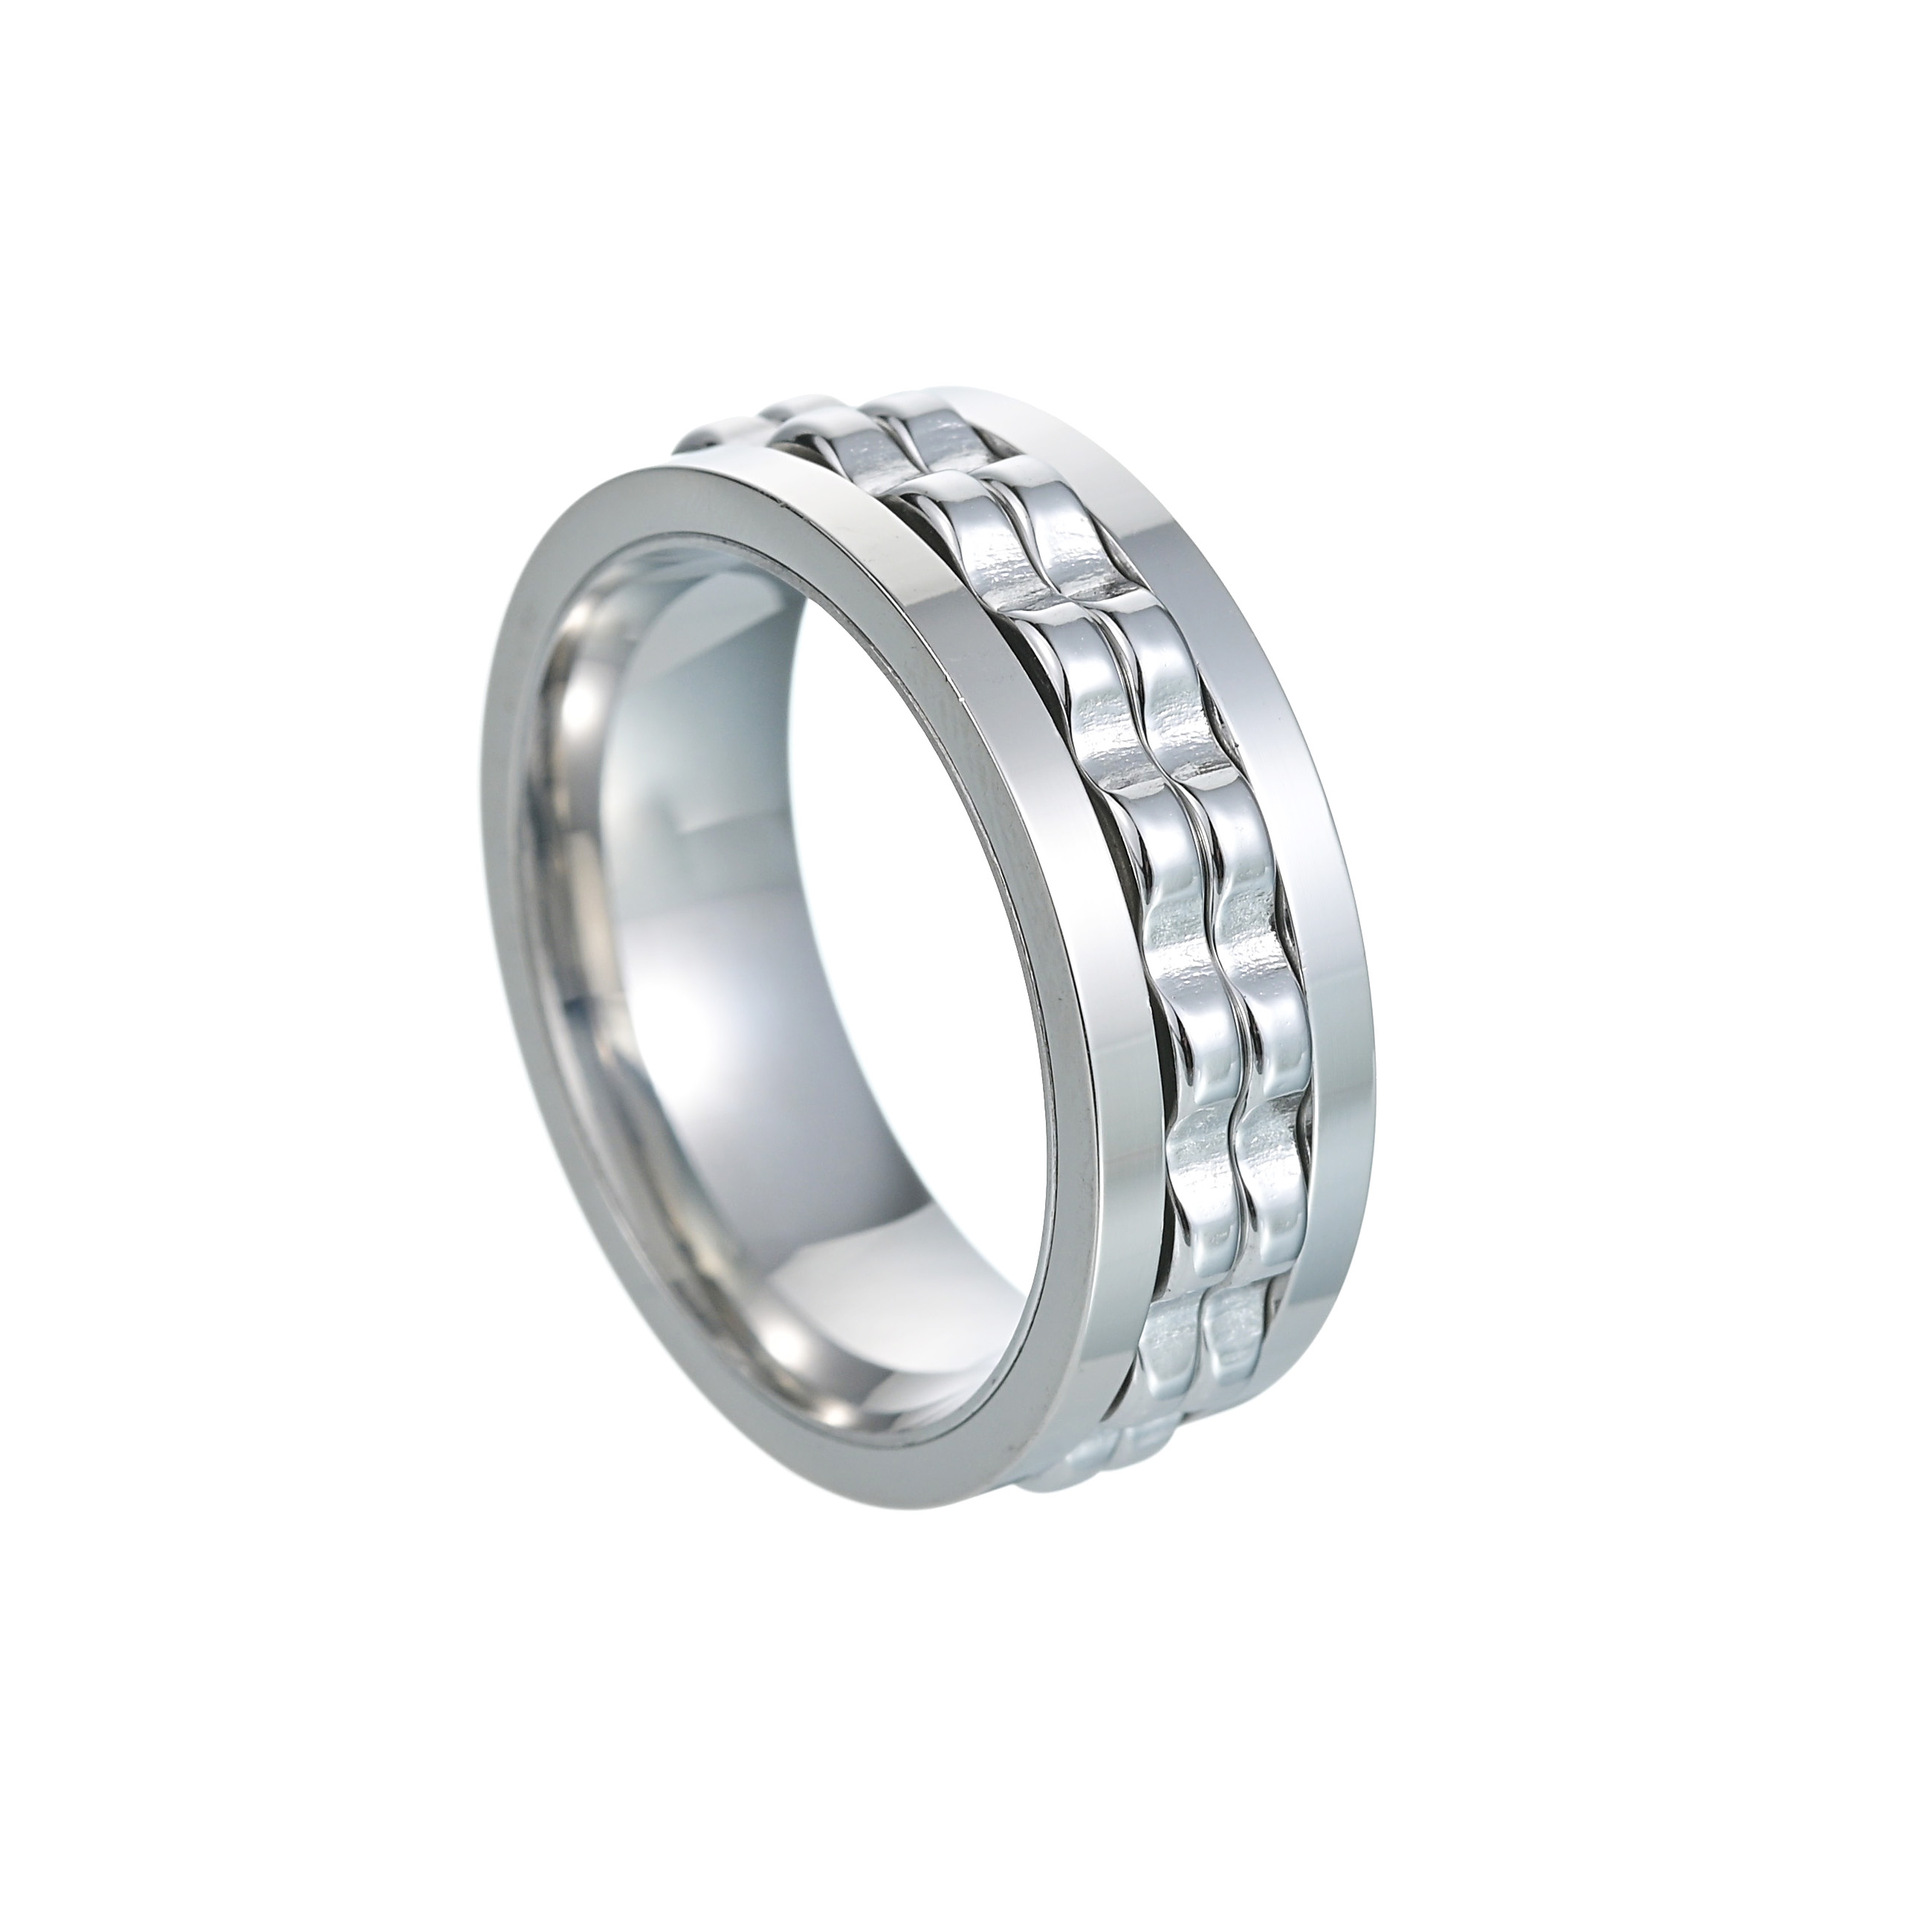 1:Silver ring   silver gear